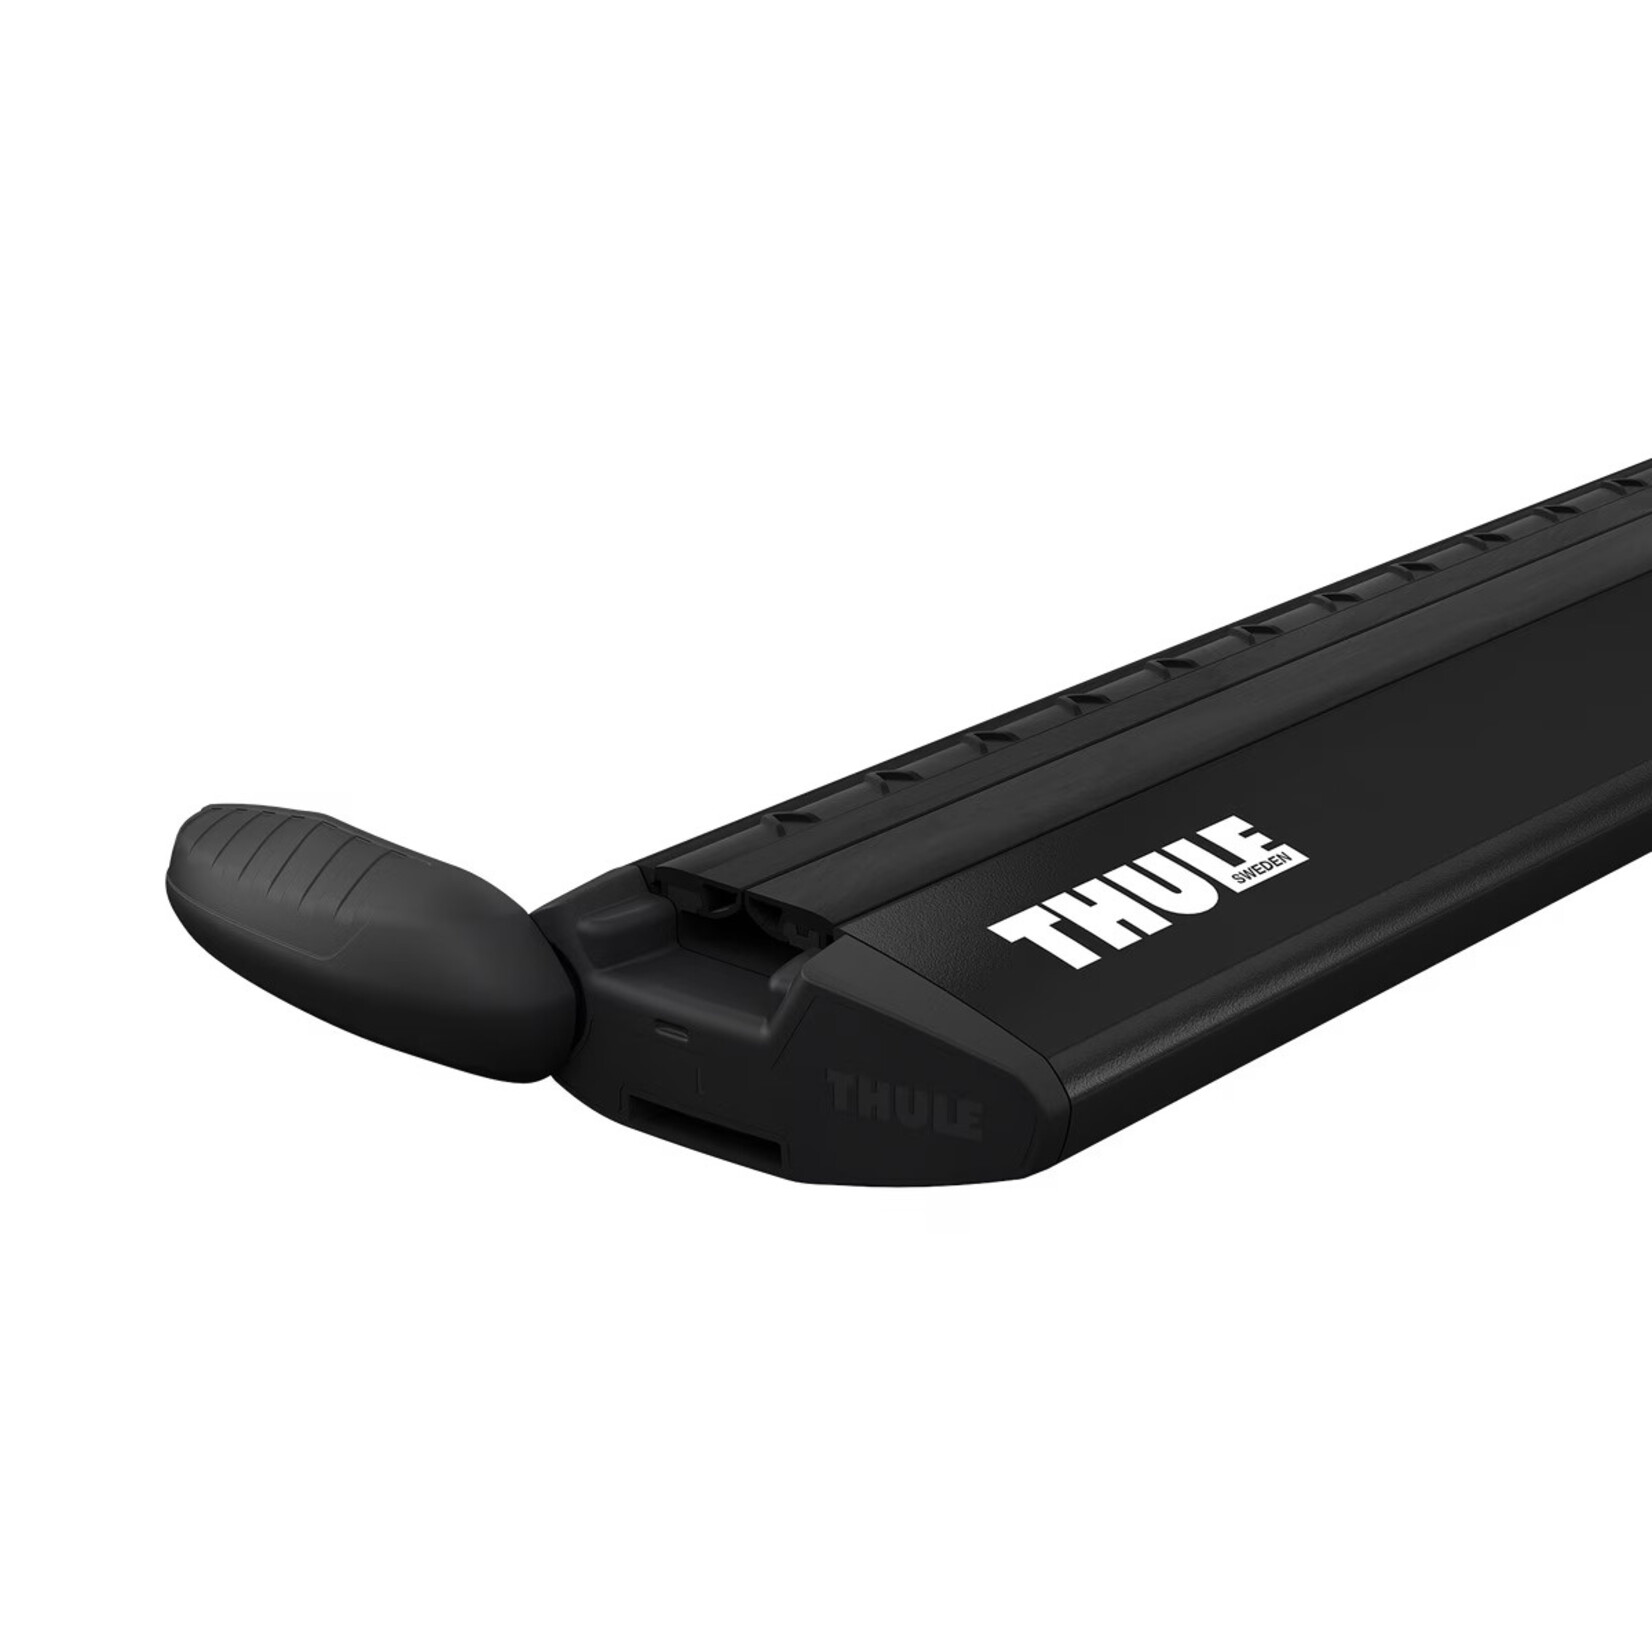 Thule Thule WingBar Evo Black 2-Pack 150cm Roof Bar (60 in) 711520